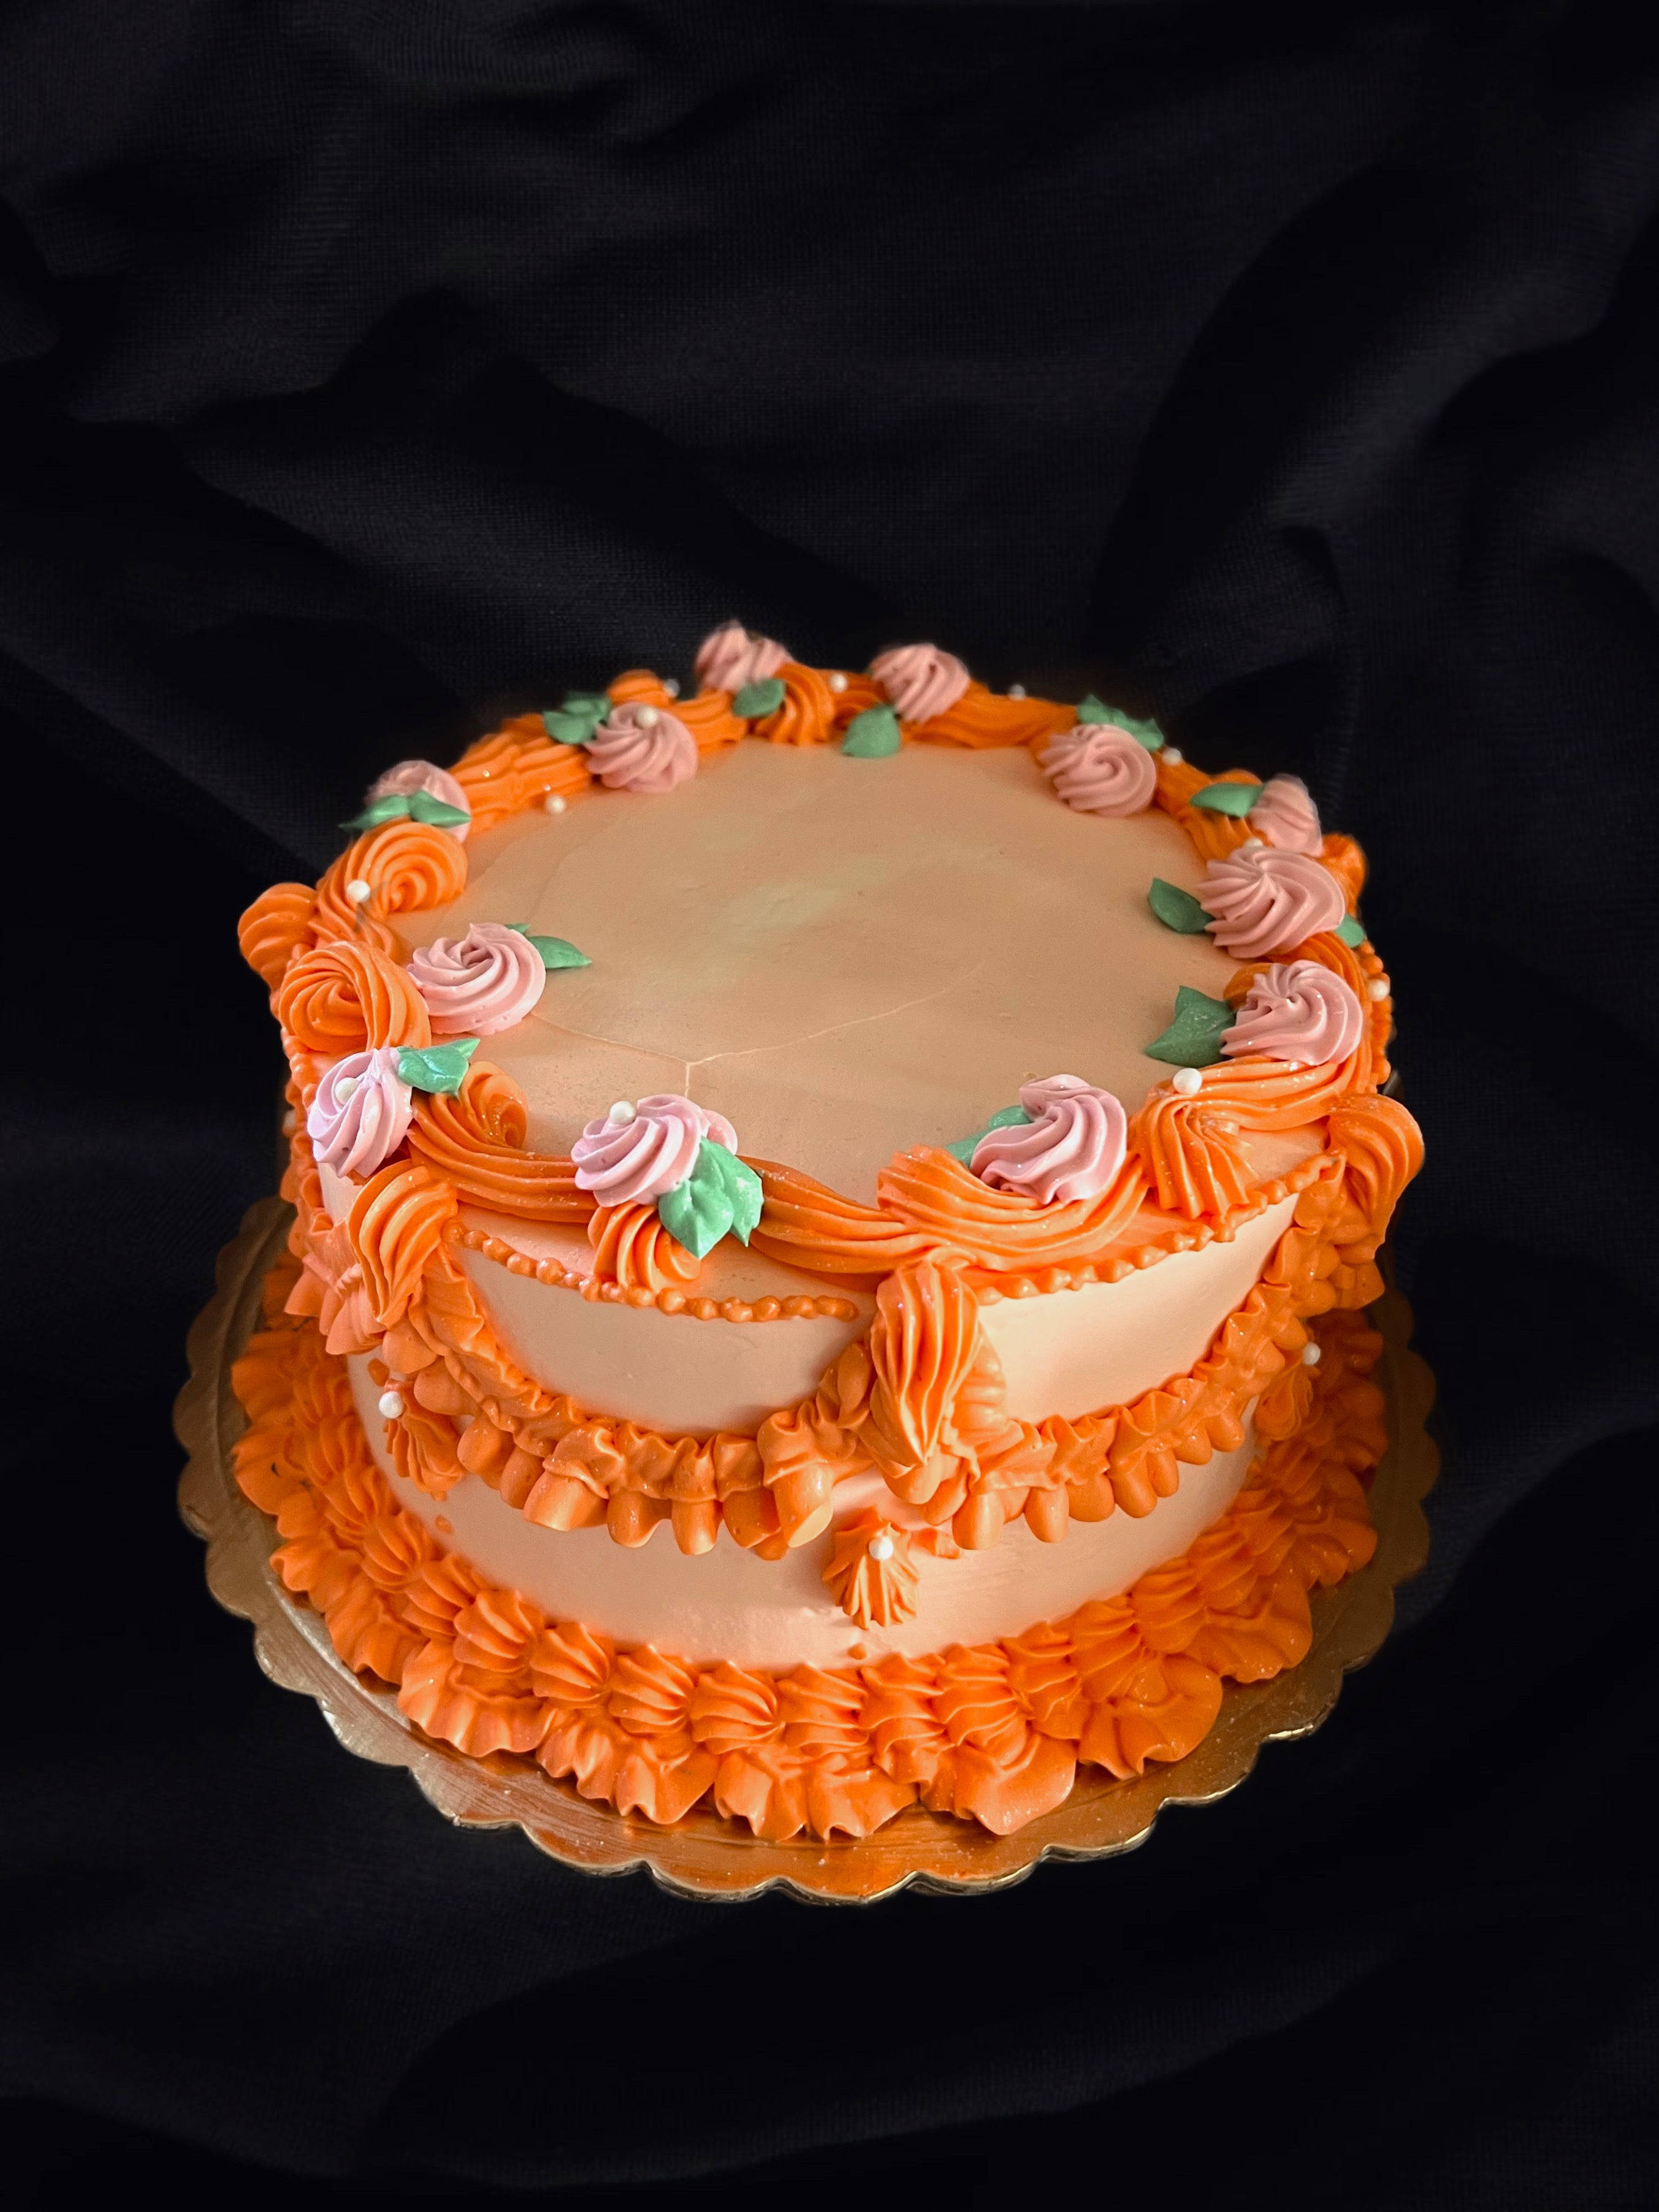 50 Vintage Inspired Lambeth Cakes That're So Trendy : Pink Heart  Buttercream Birthday Cake